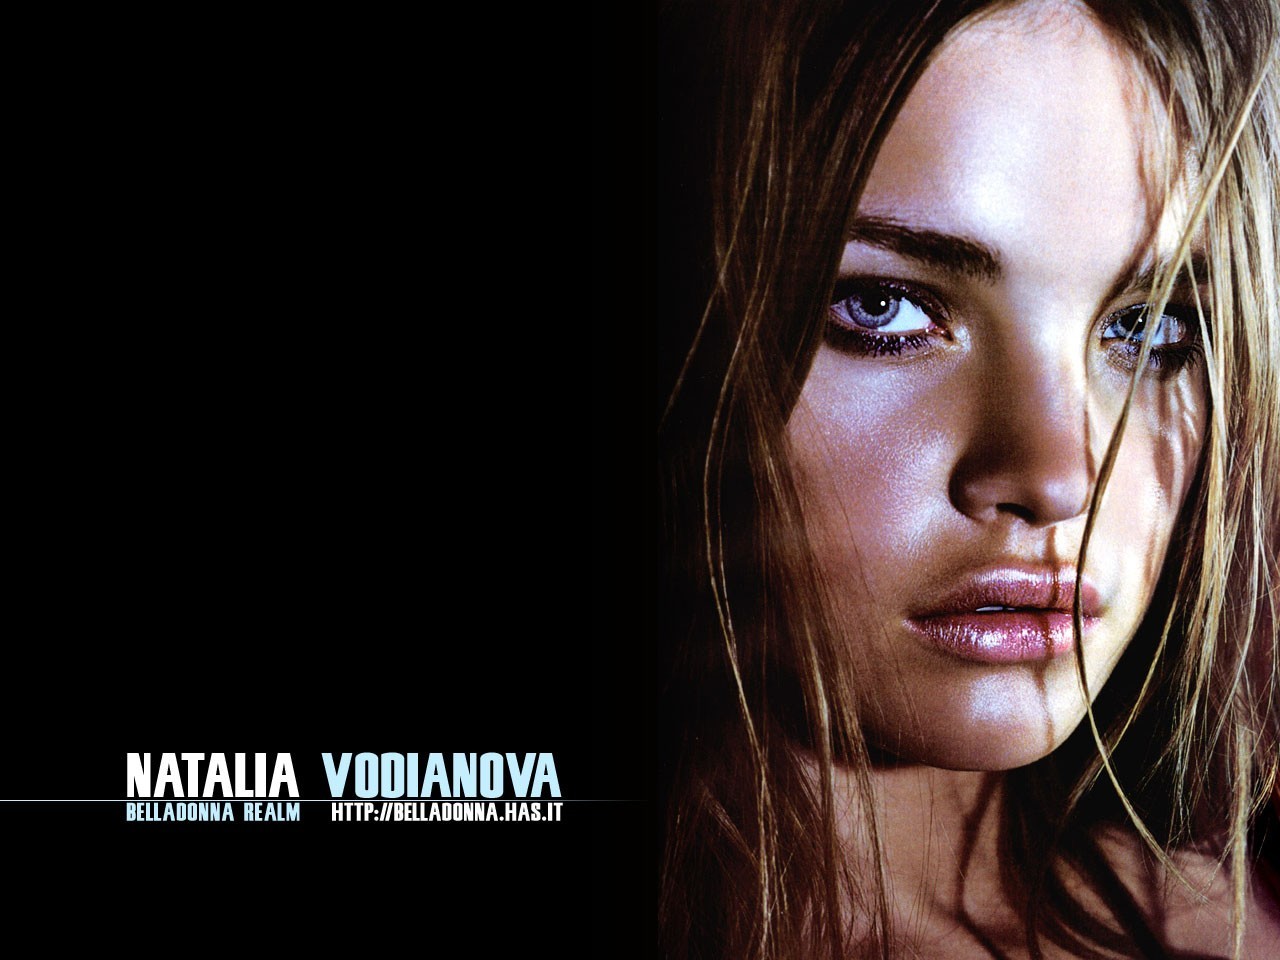 Desktop Wallpapers - Natalia Vodianova - Models | Free Desktop ...